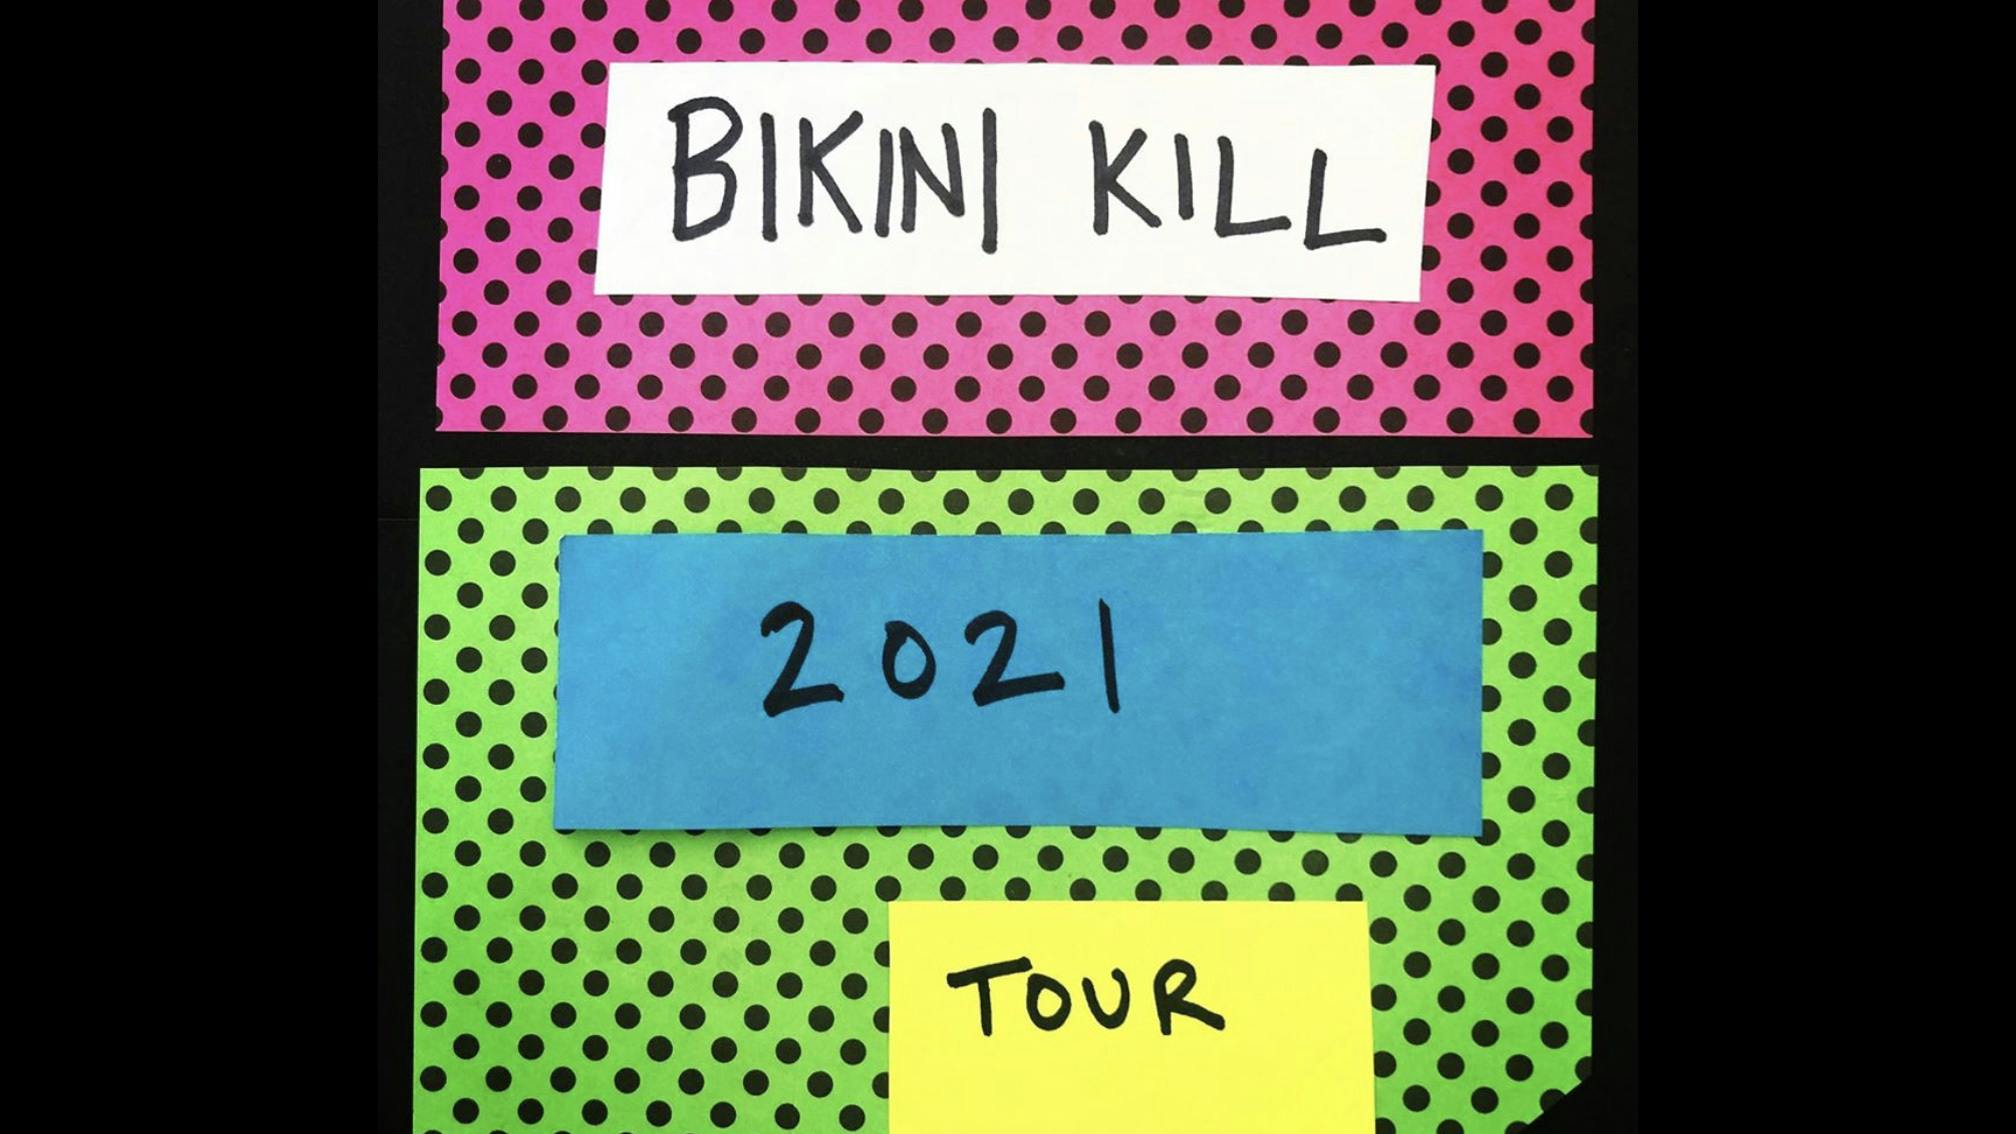 Bikini Kill Announce Rescheduled 2021 Reunion Tour